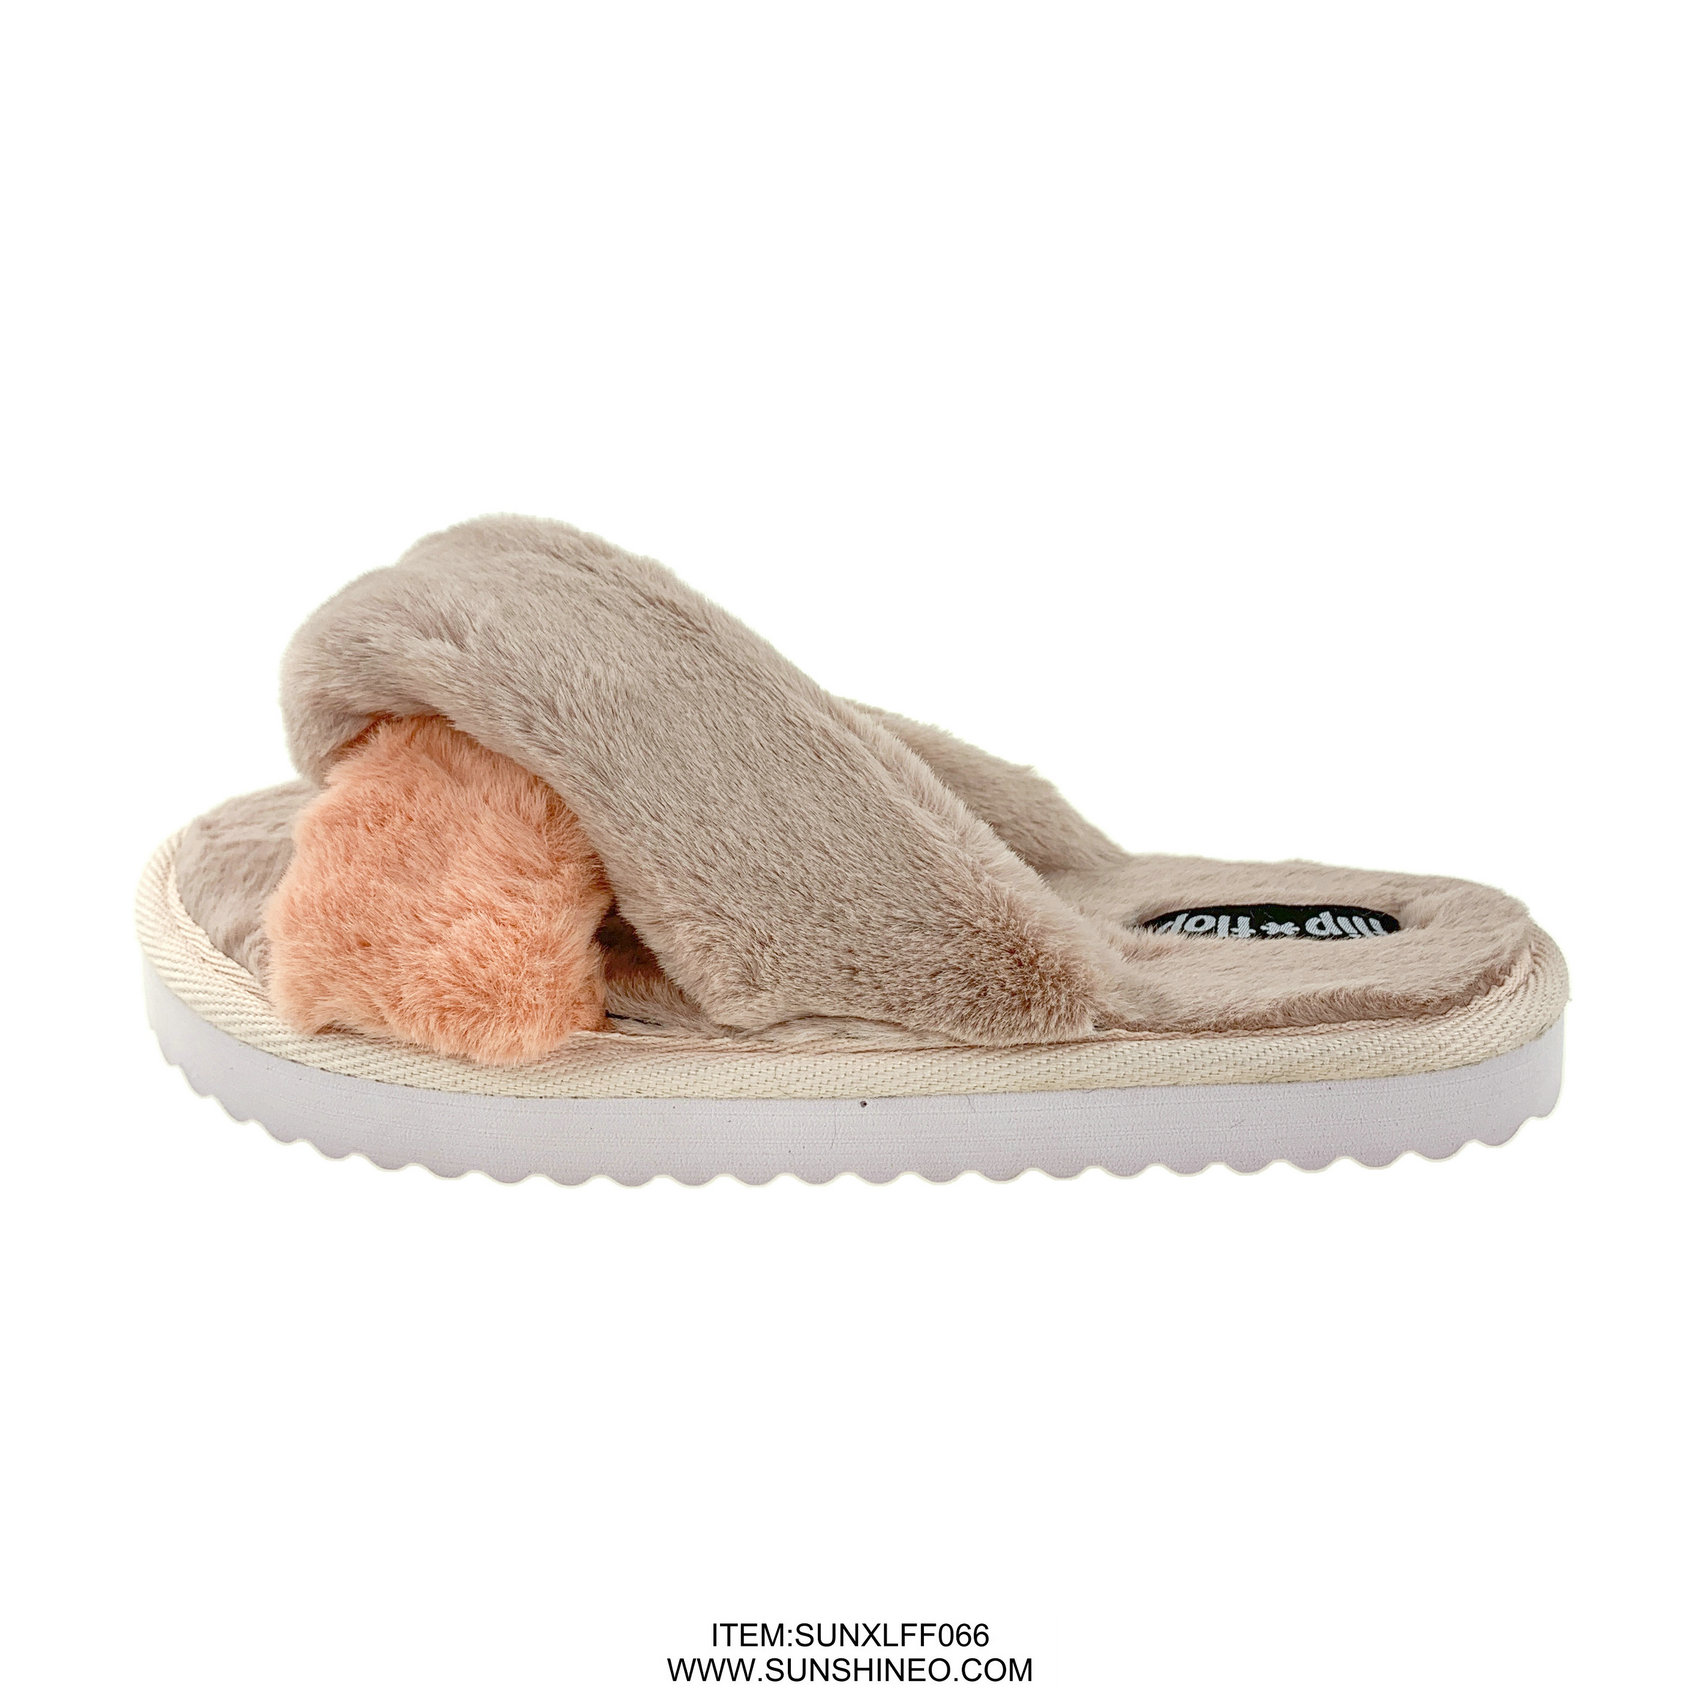 SUNXLFF066 fur flip flop sandals winter slippers